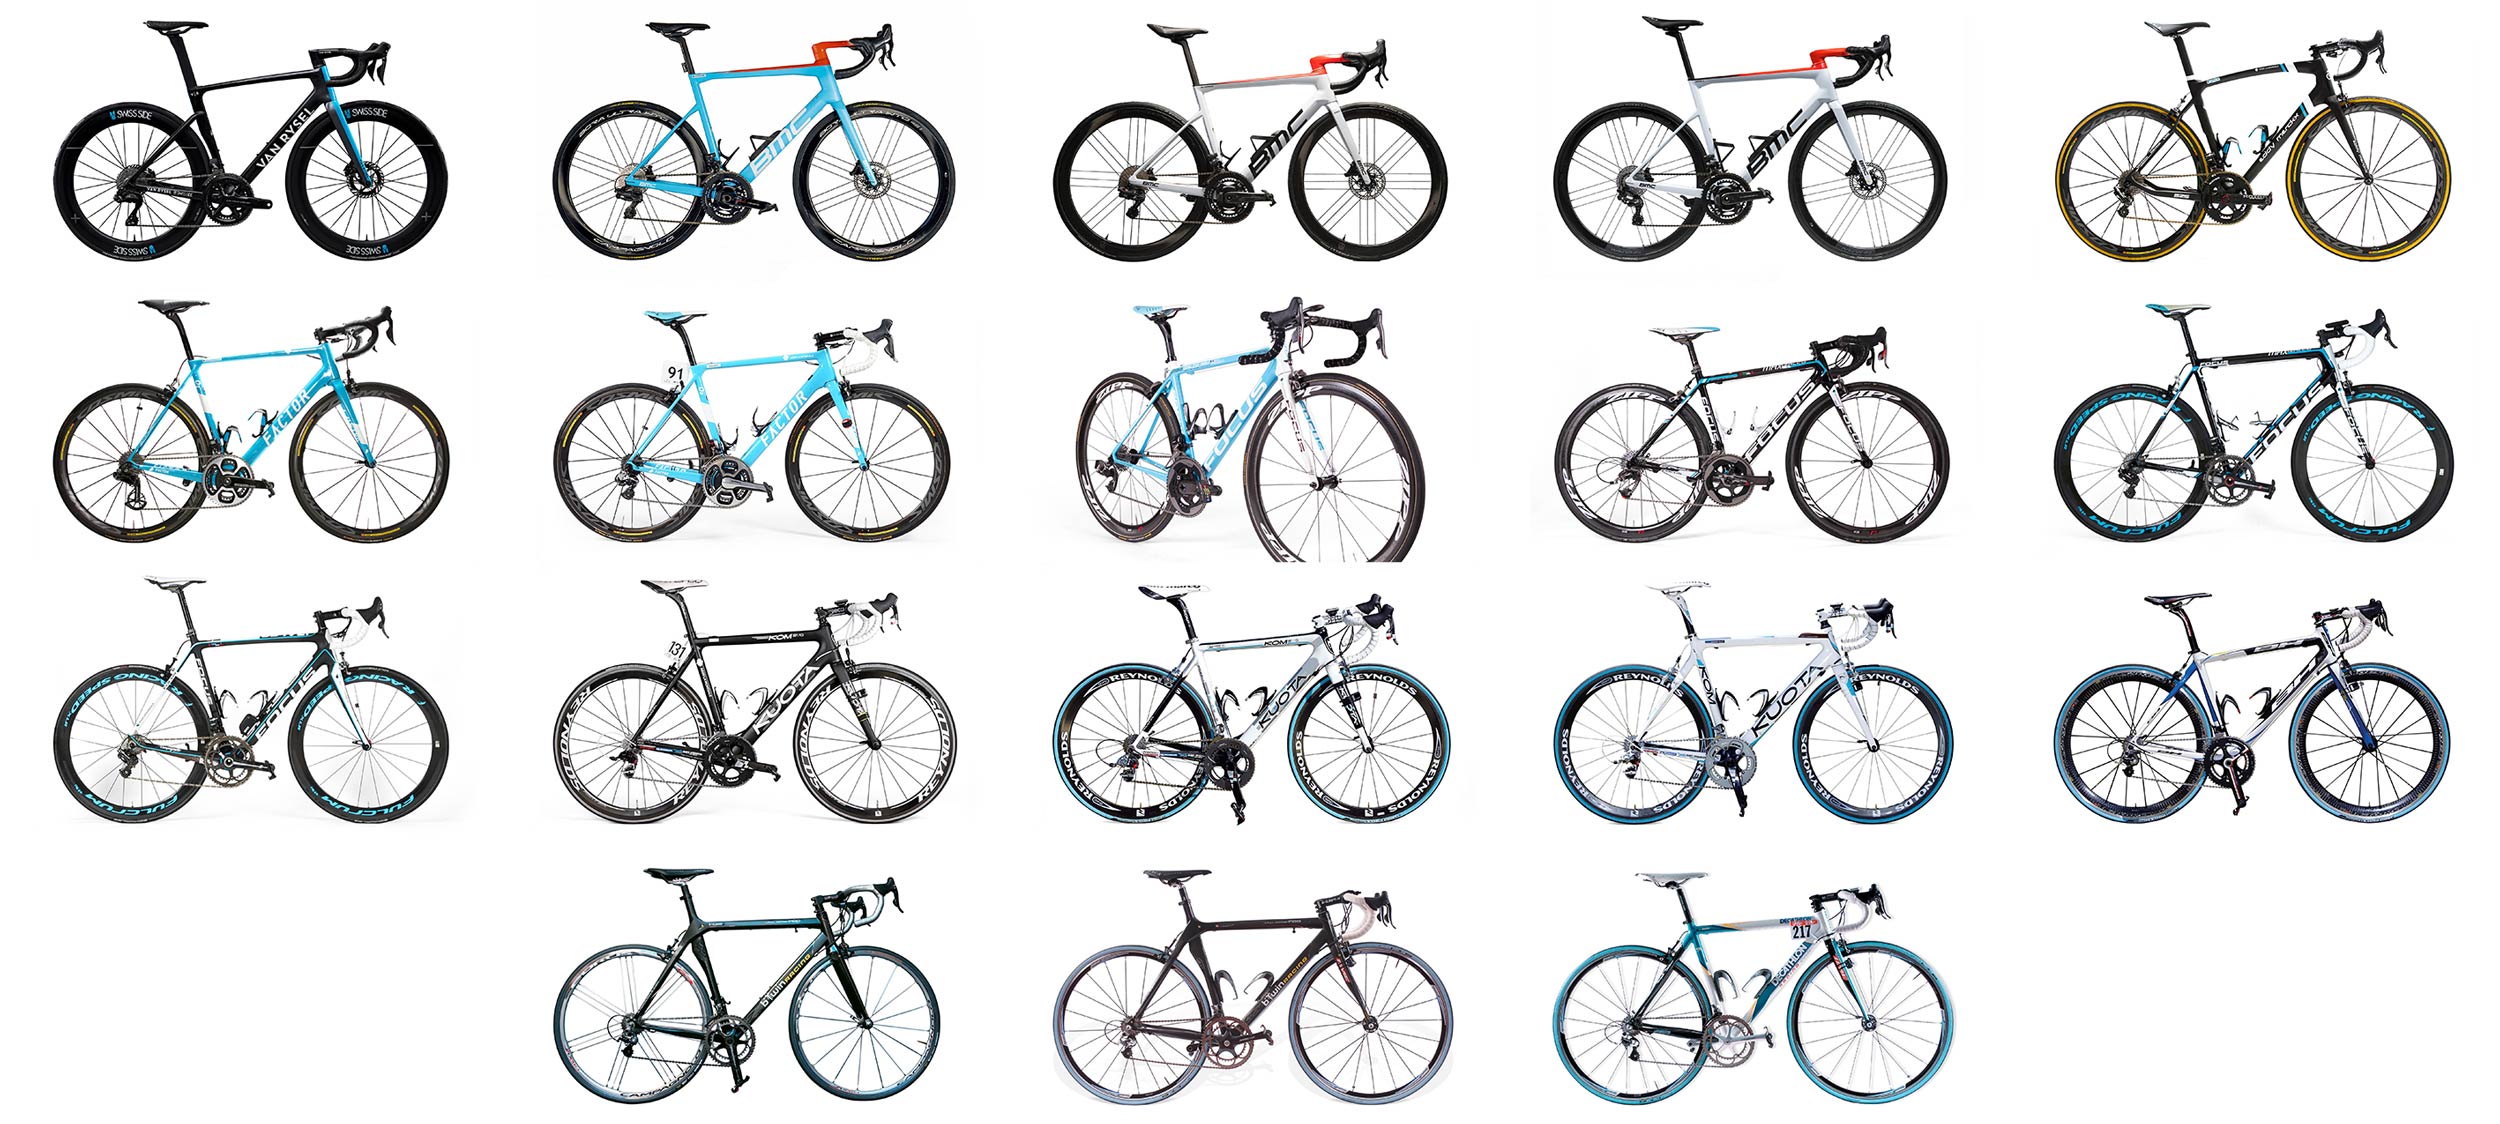 All Van Rysel bikes and equipment for the new Decathlon-AG2R